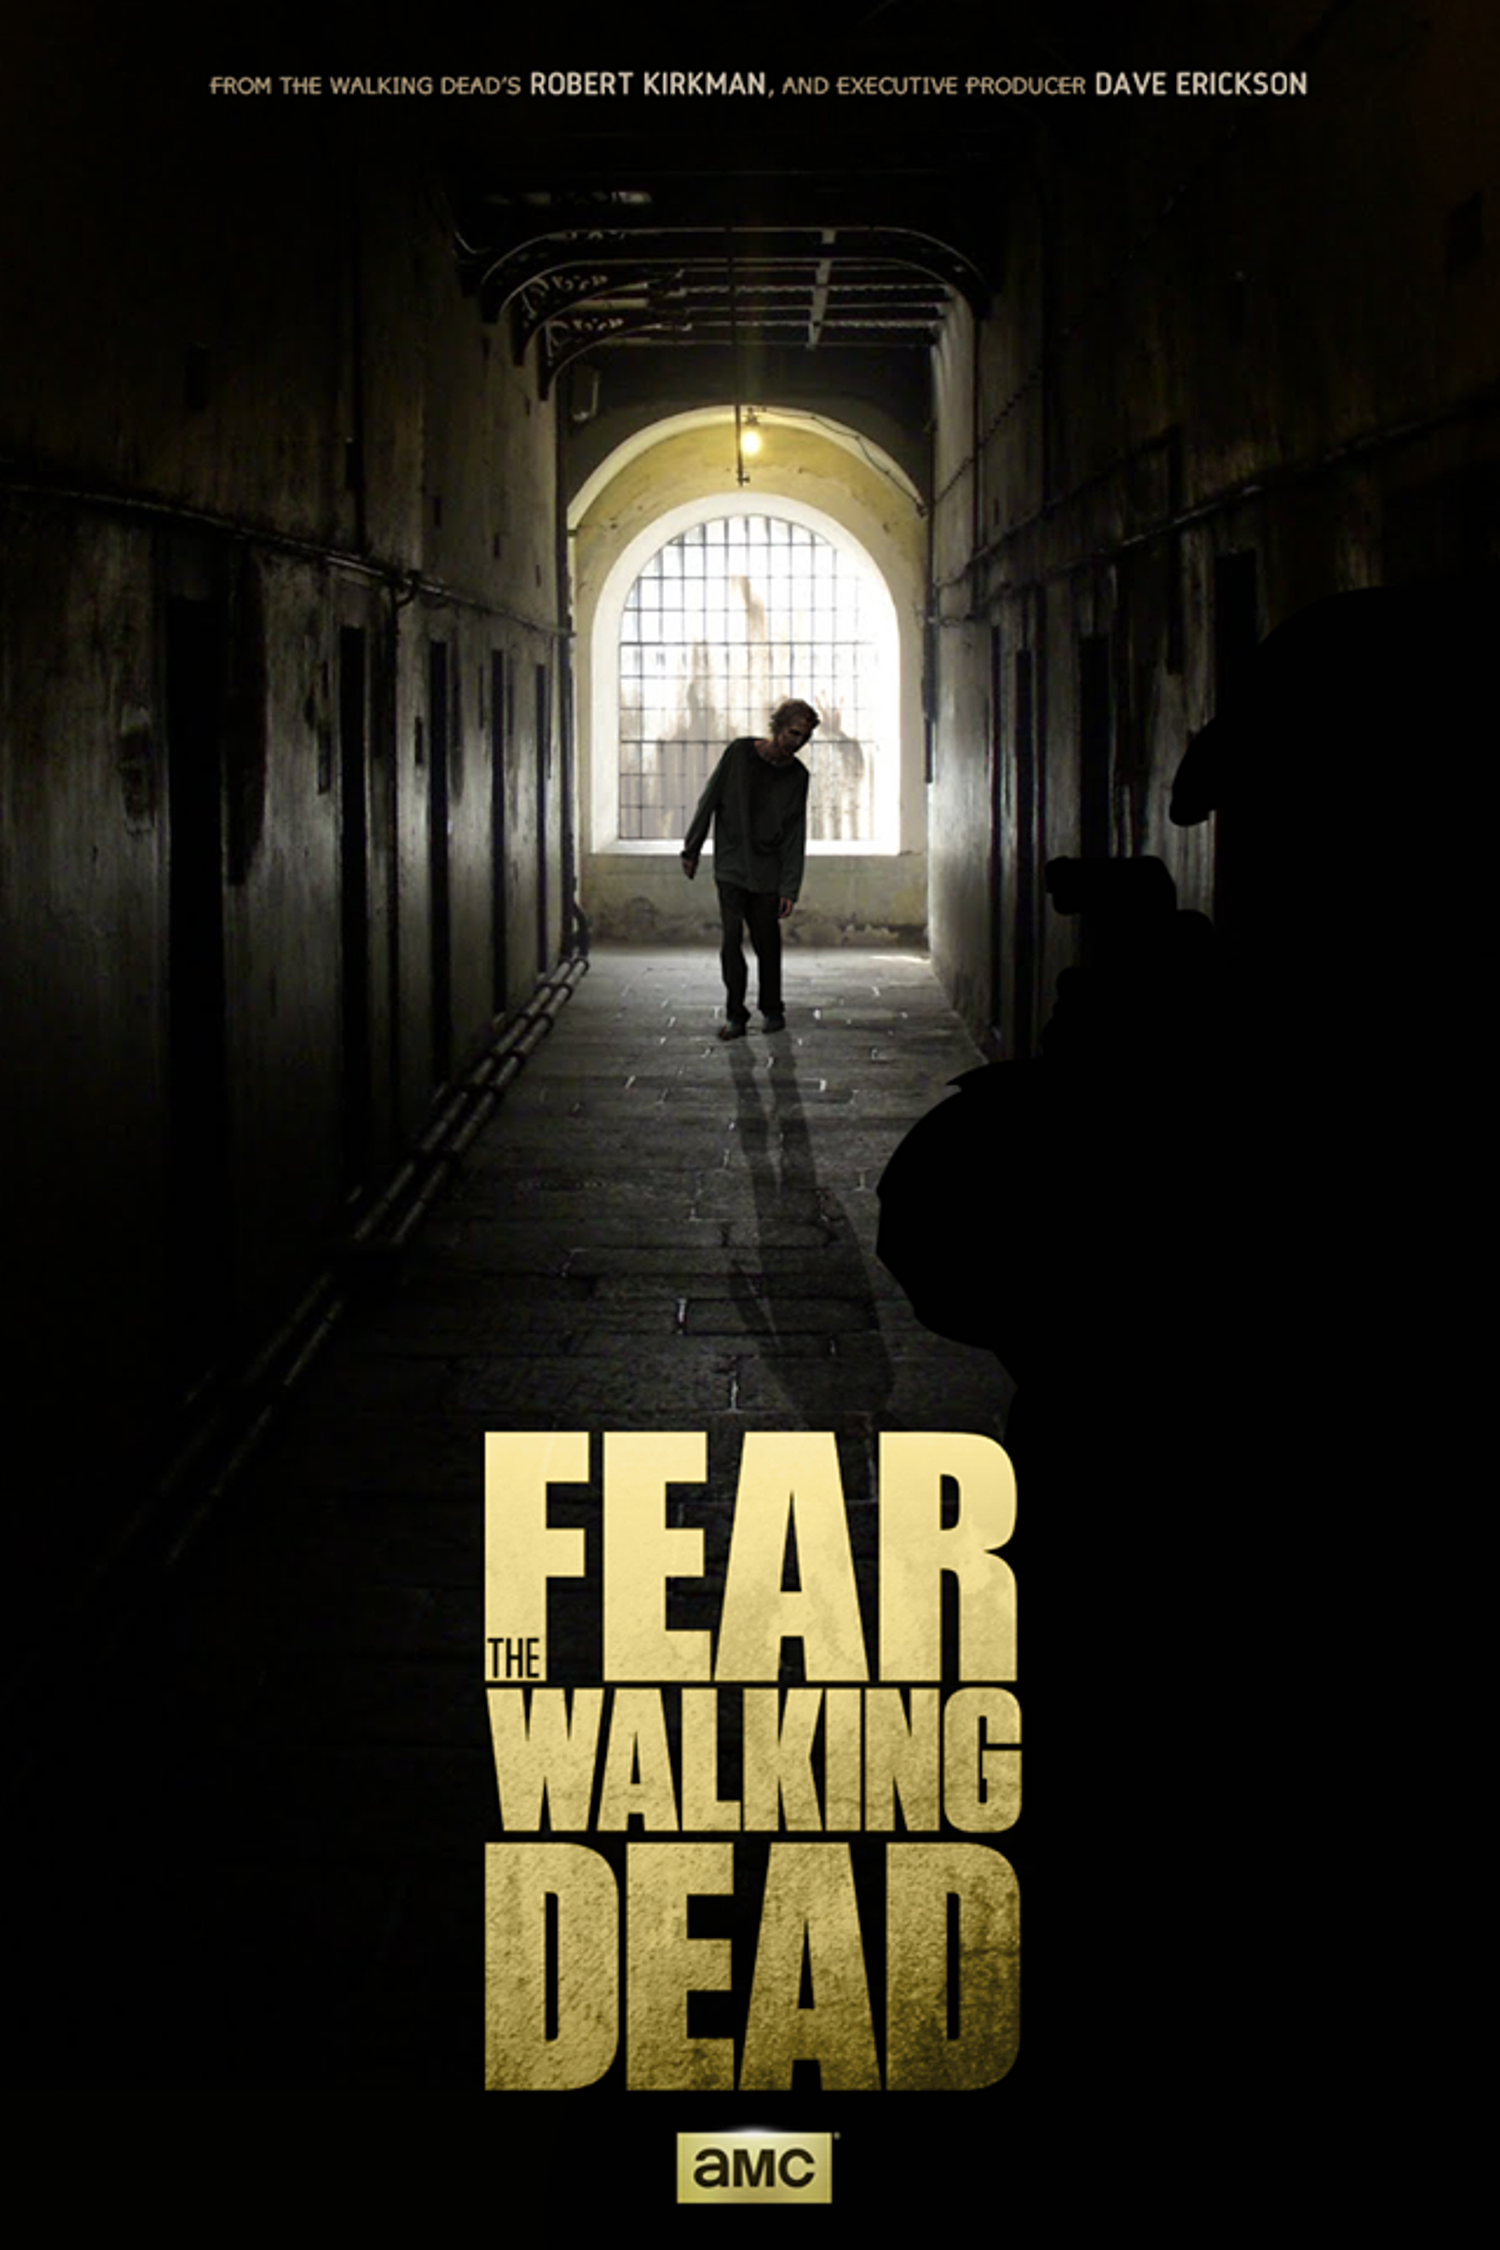 Fear The Walking Dead Backgrounds, Compatible - PC, Mobile, Gadgets| 1500x2250 px